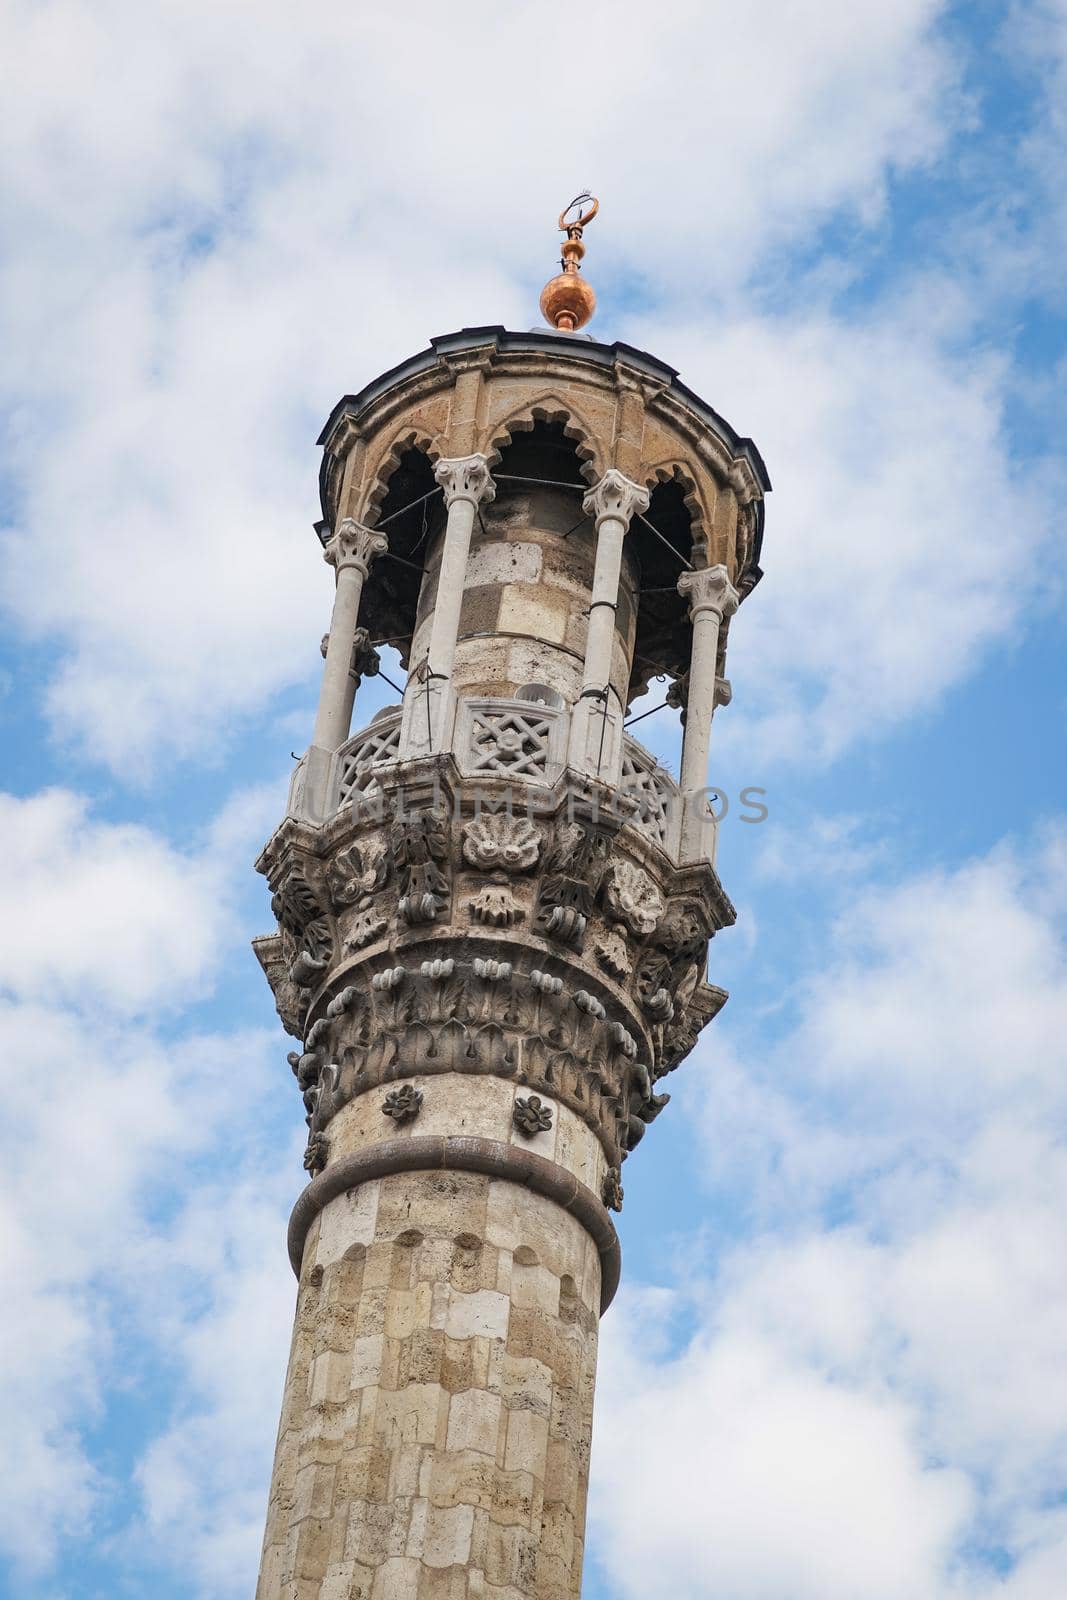 Minaret of Aziziye Mosque in Konya, Turkiye by EvrenKalinbacak